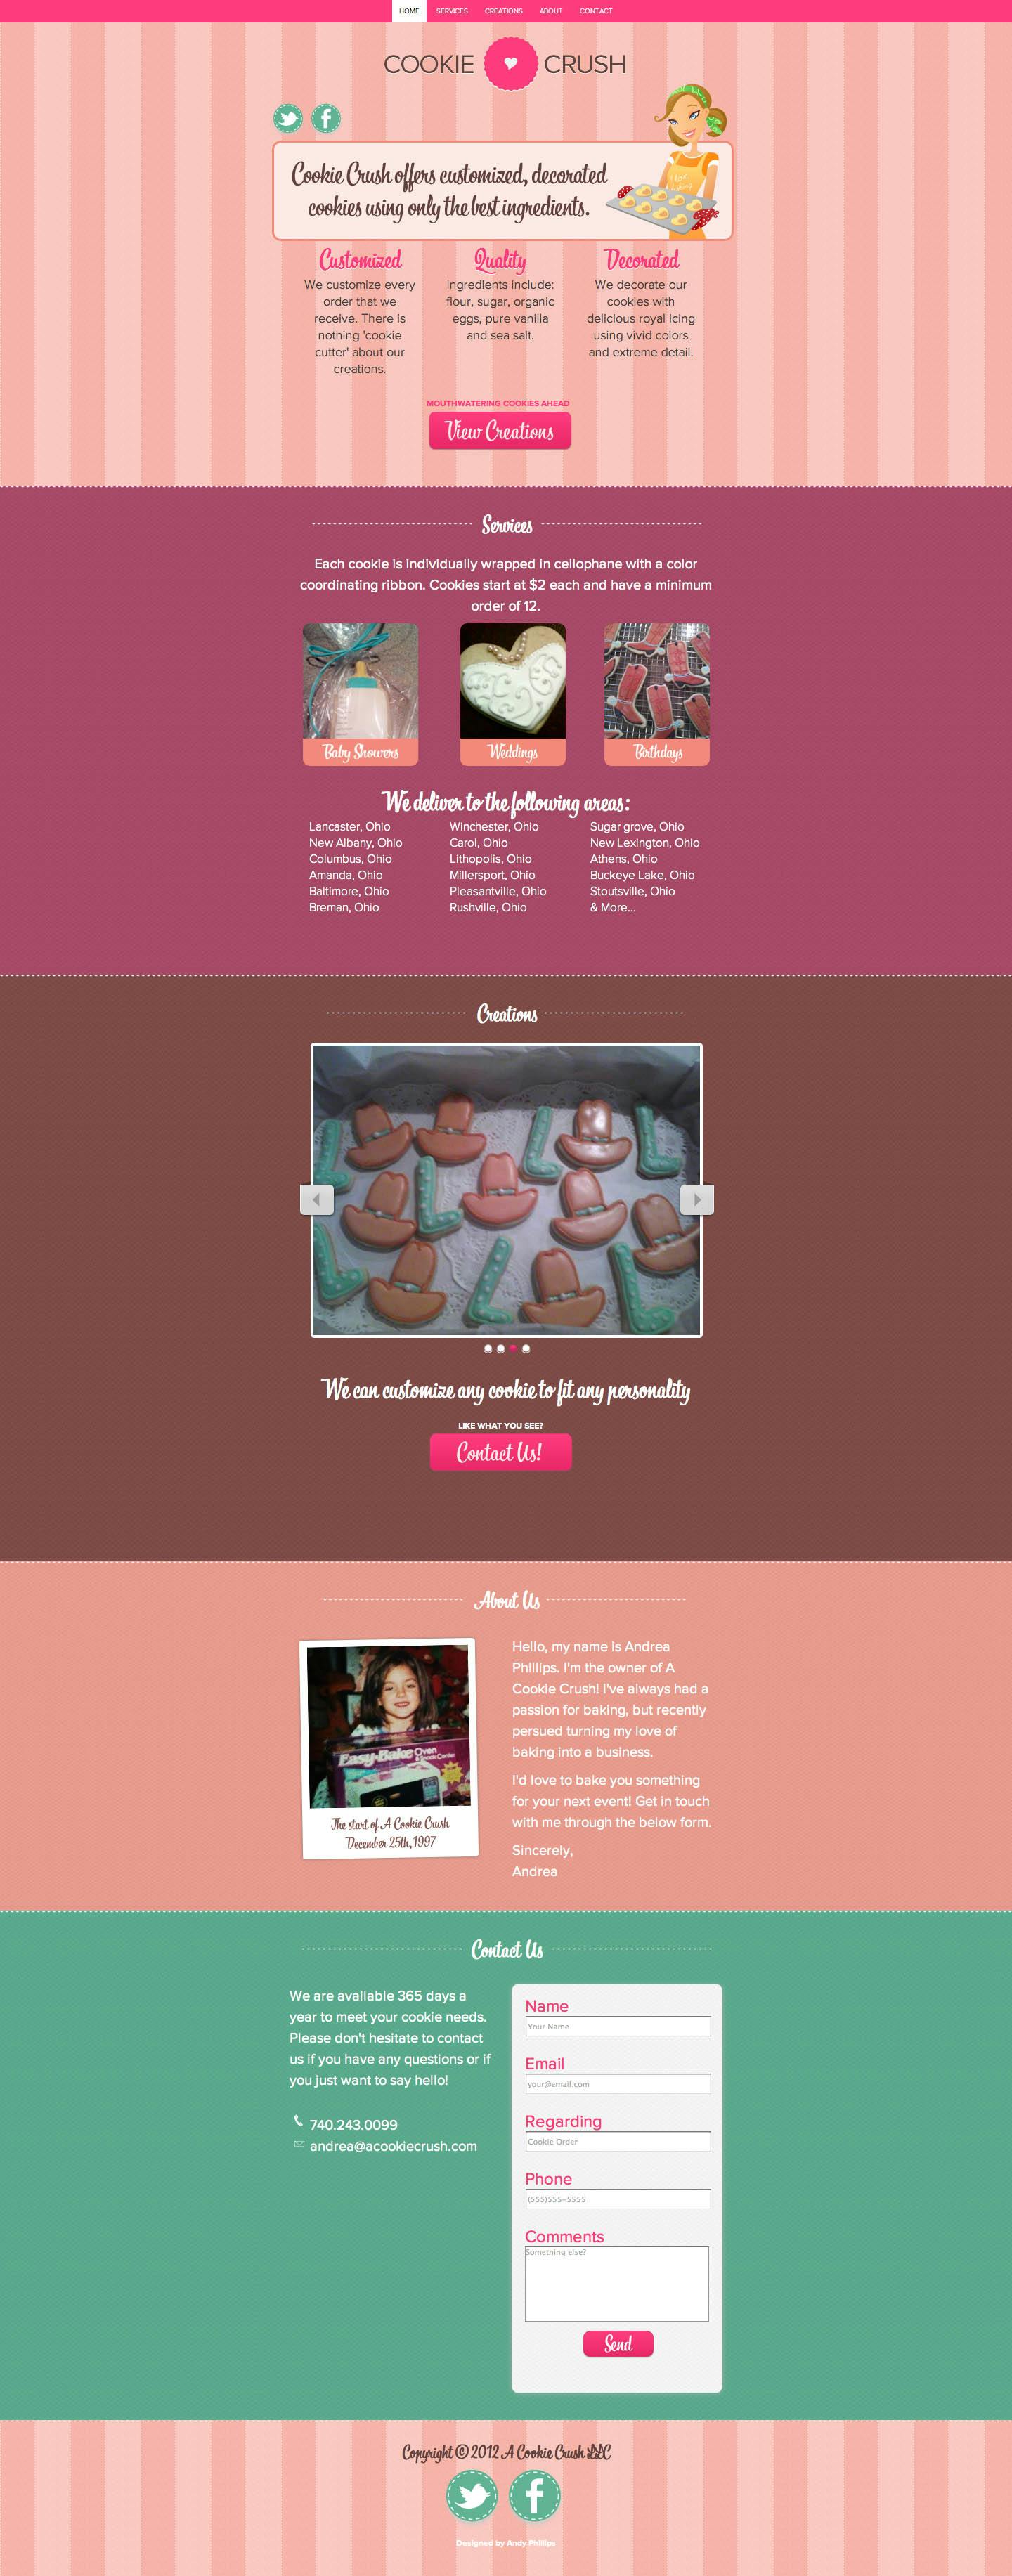 Cookie Crush Website Screenshot